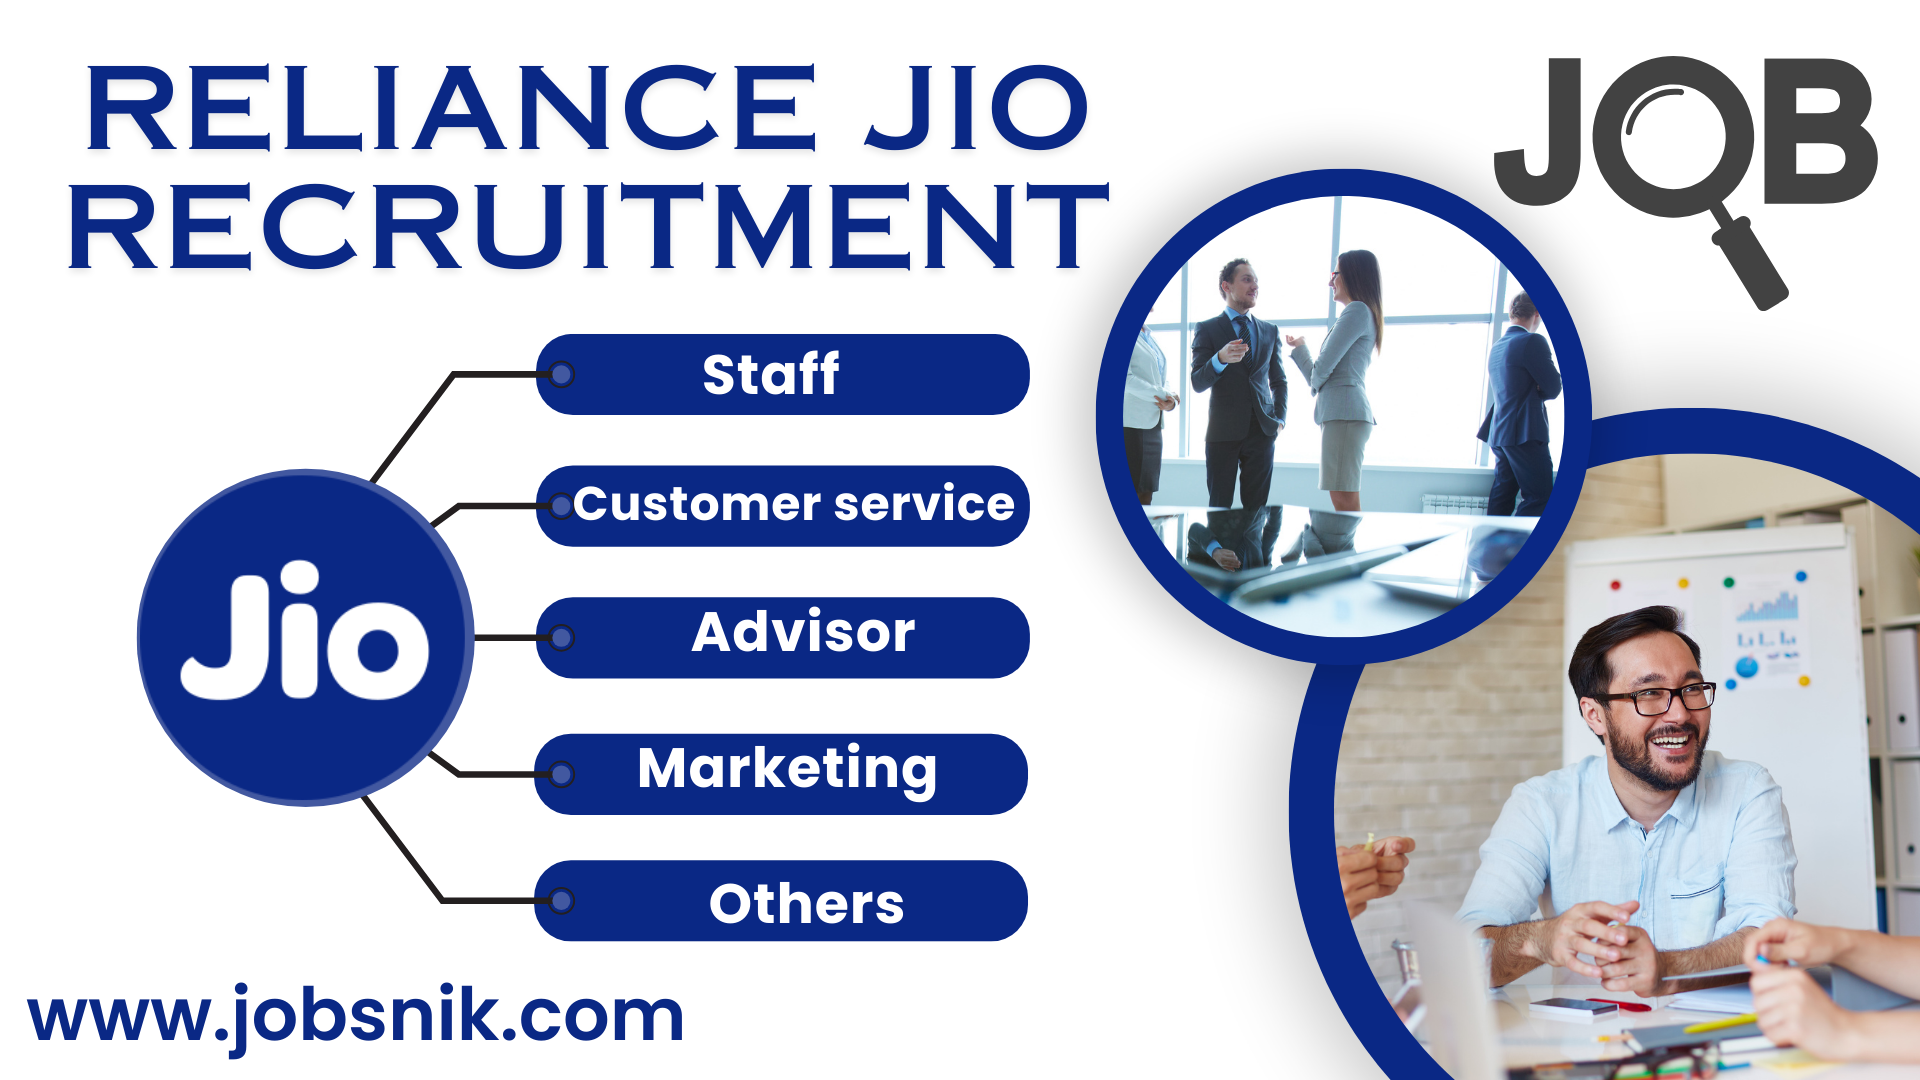 reliance jio recruitment